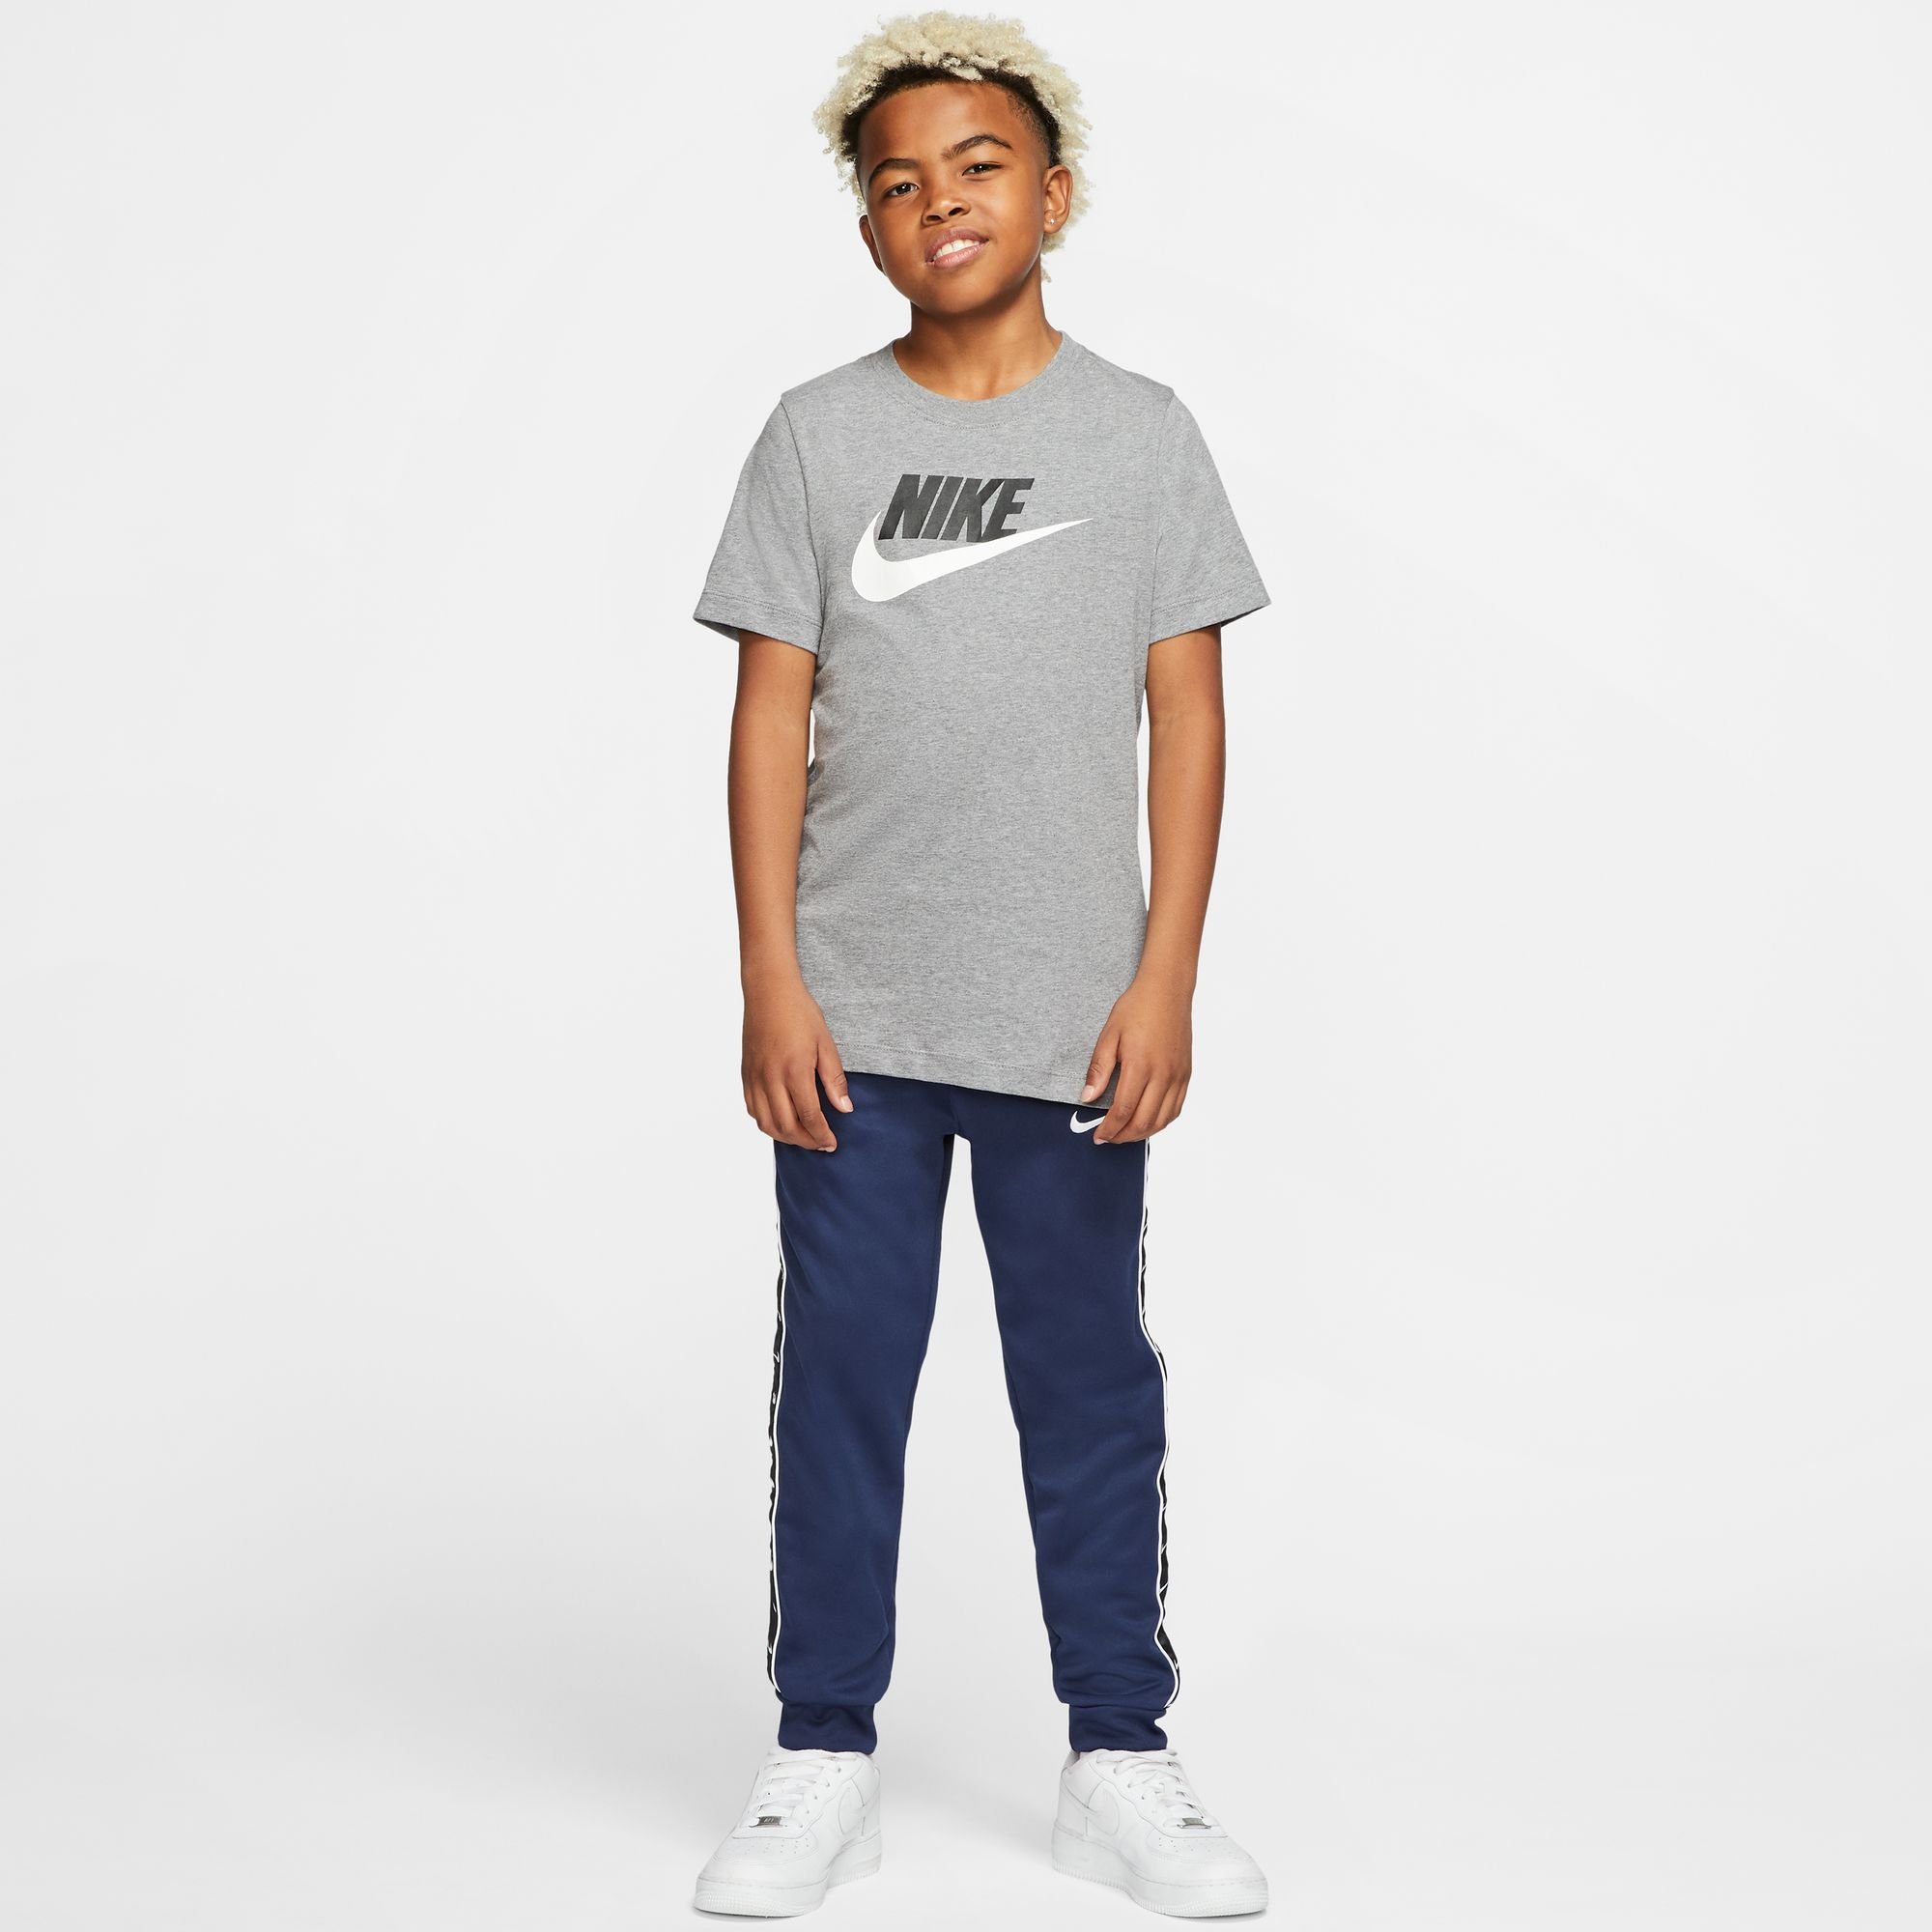 COTTON Sportswear grau-meliert KIDS' T-SHIRT T-Shirt BIG Nike